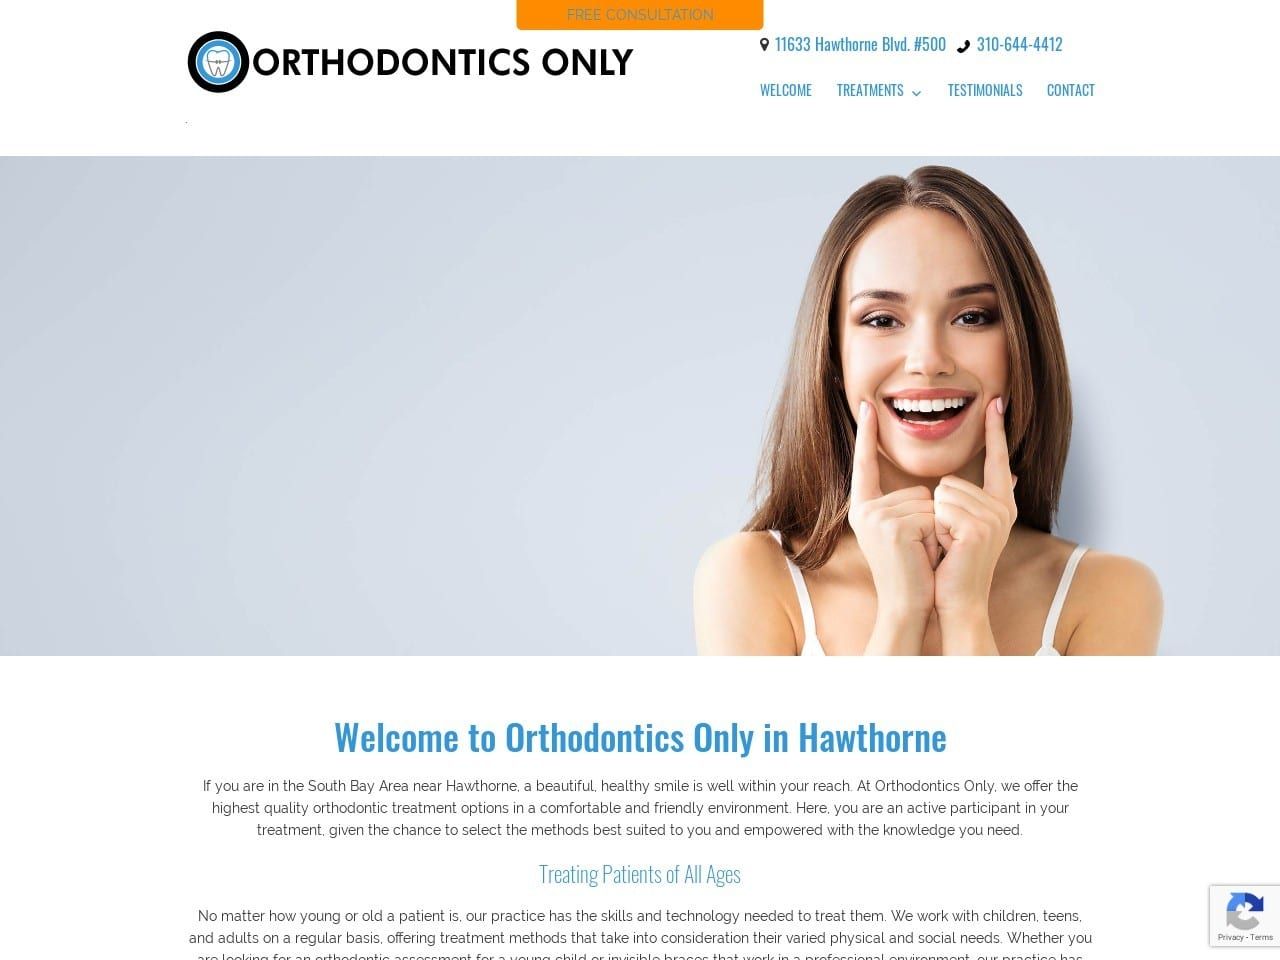 Orthodontics Only Website Screenshot from orthodonticsonly.com